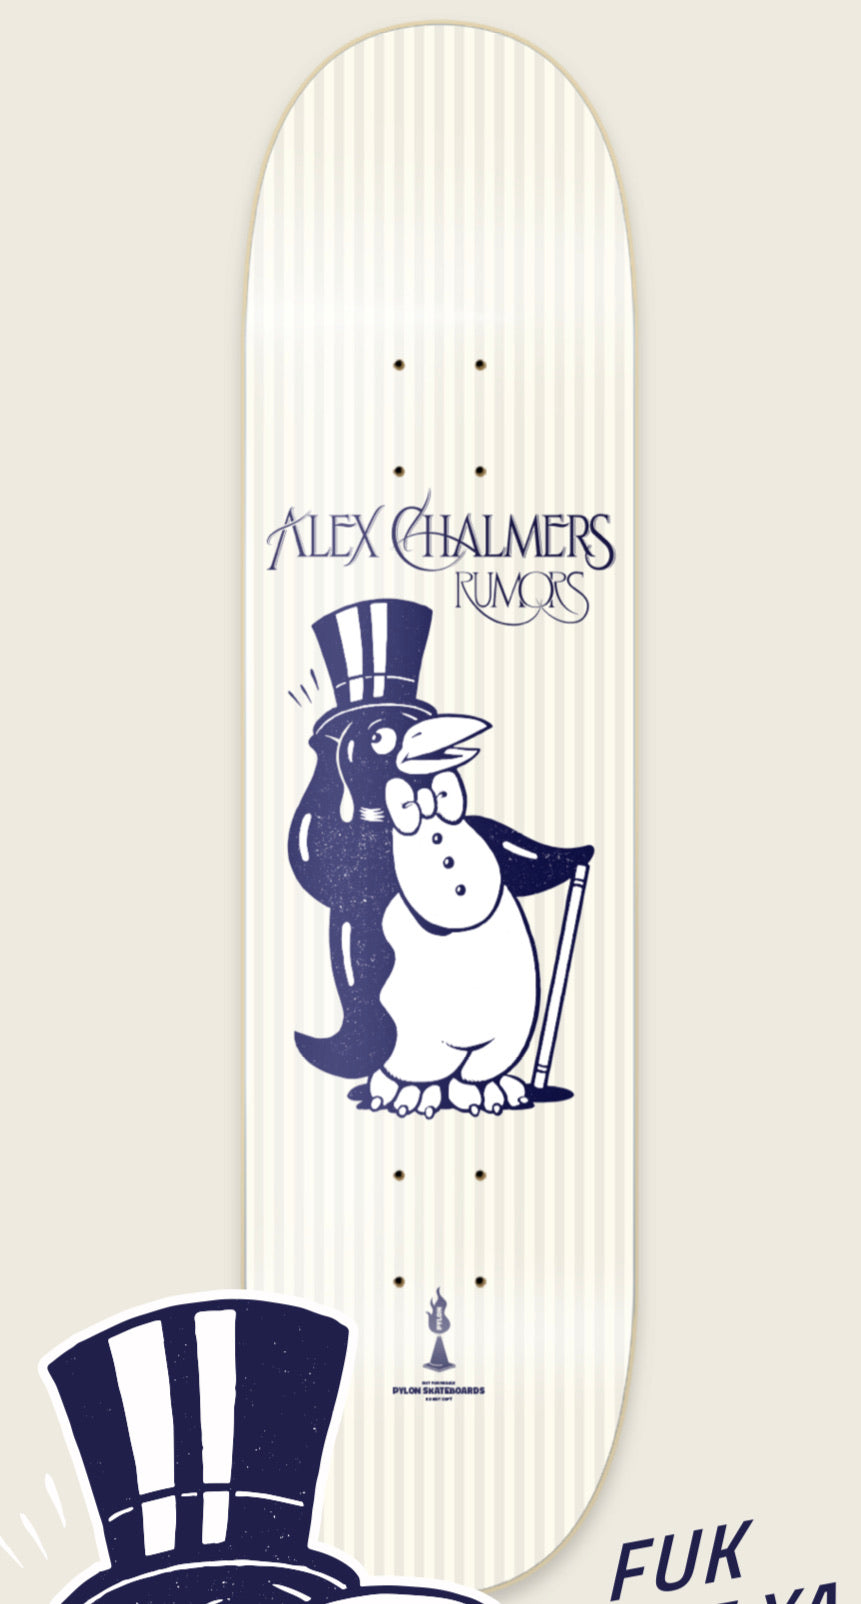 Pylon - Alex Chalmers “Rumors” Deck